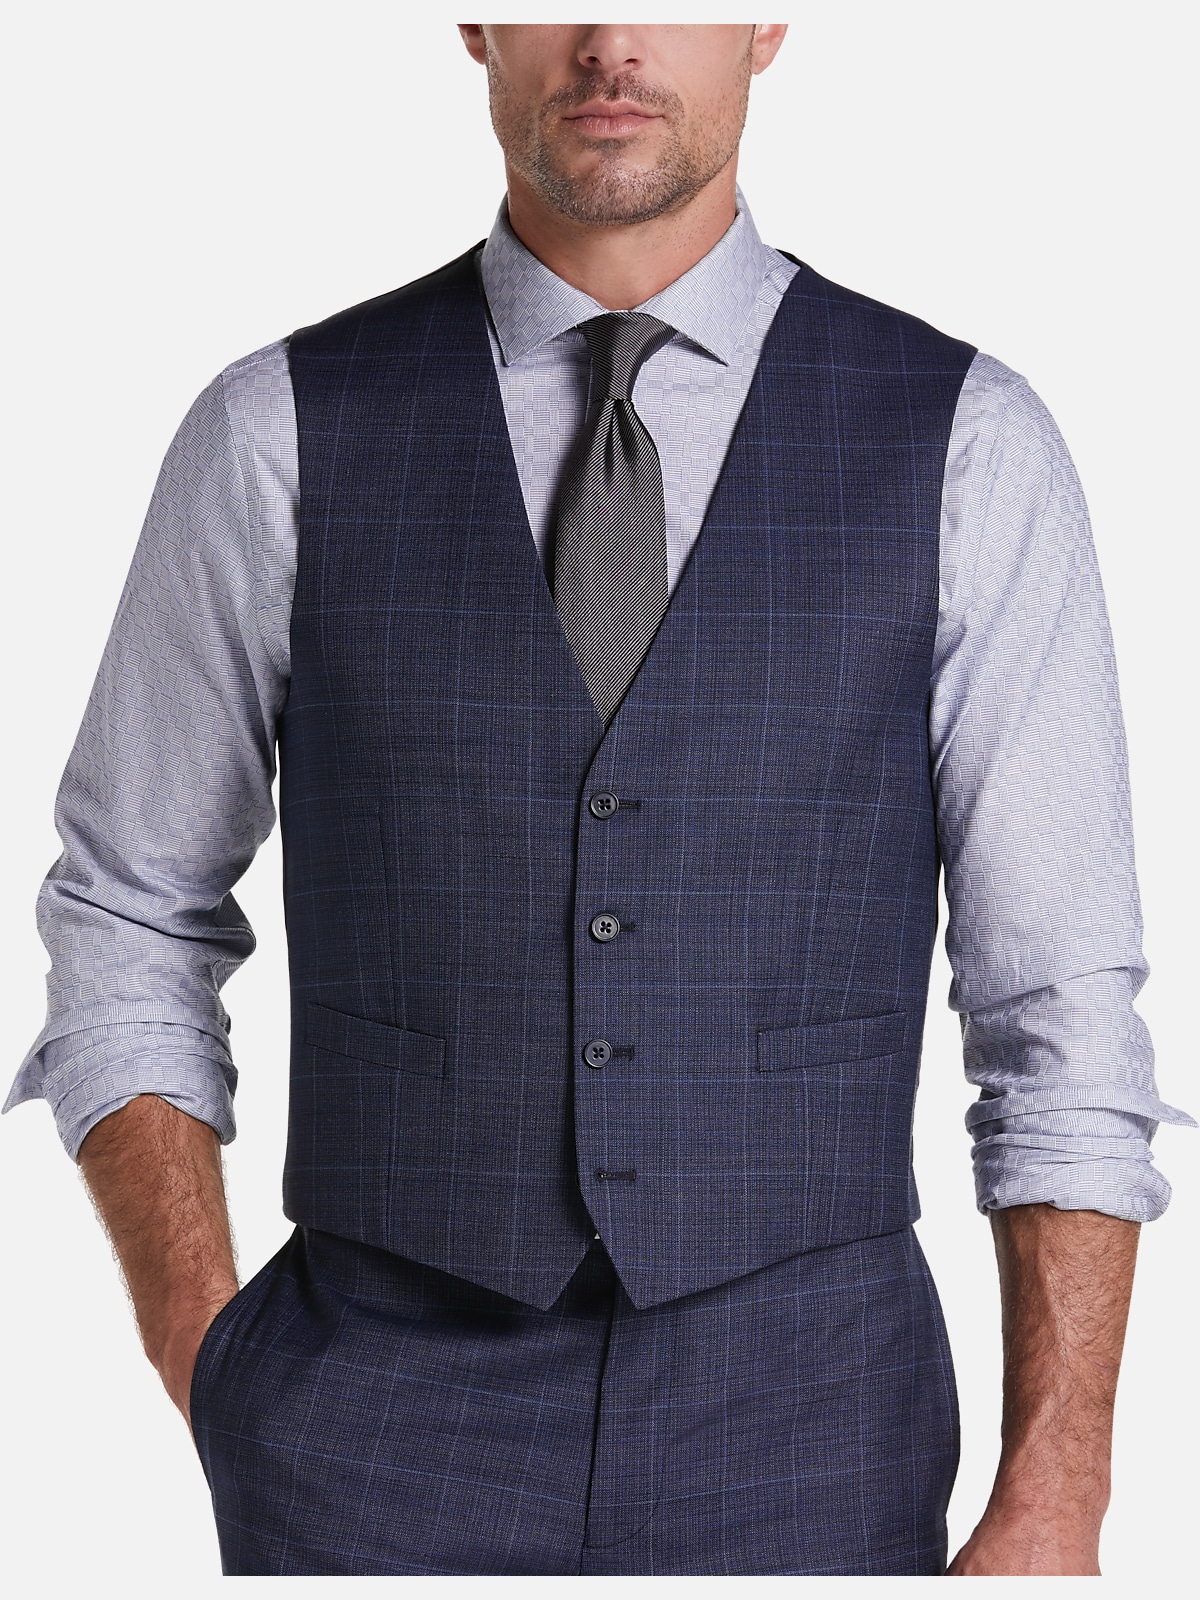 Calvin Klein Slim Fit Windowpane Suit Separates Vest | All Sale| Men's ...